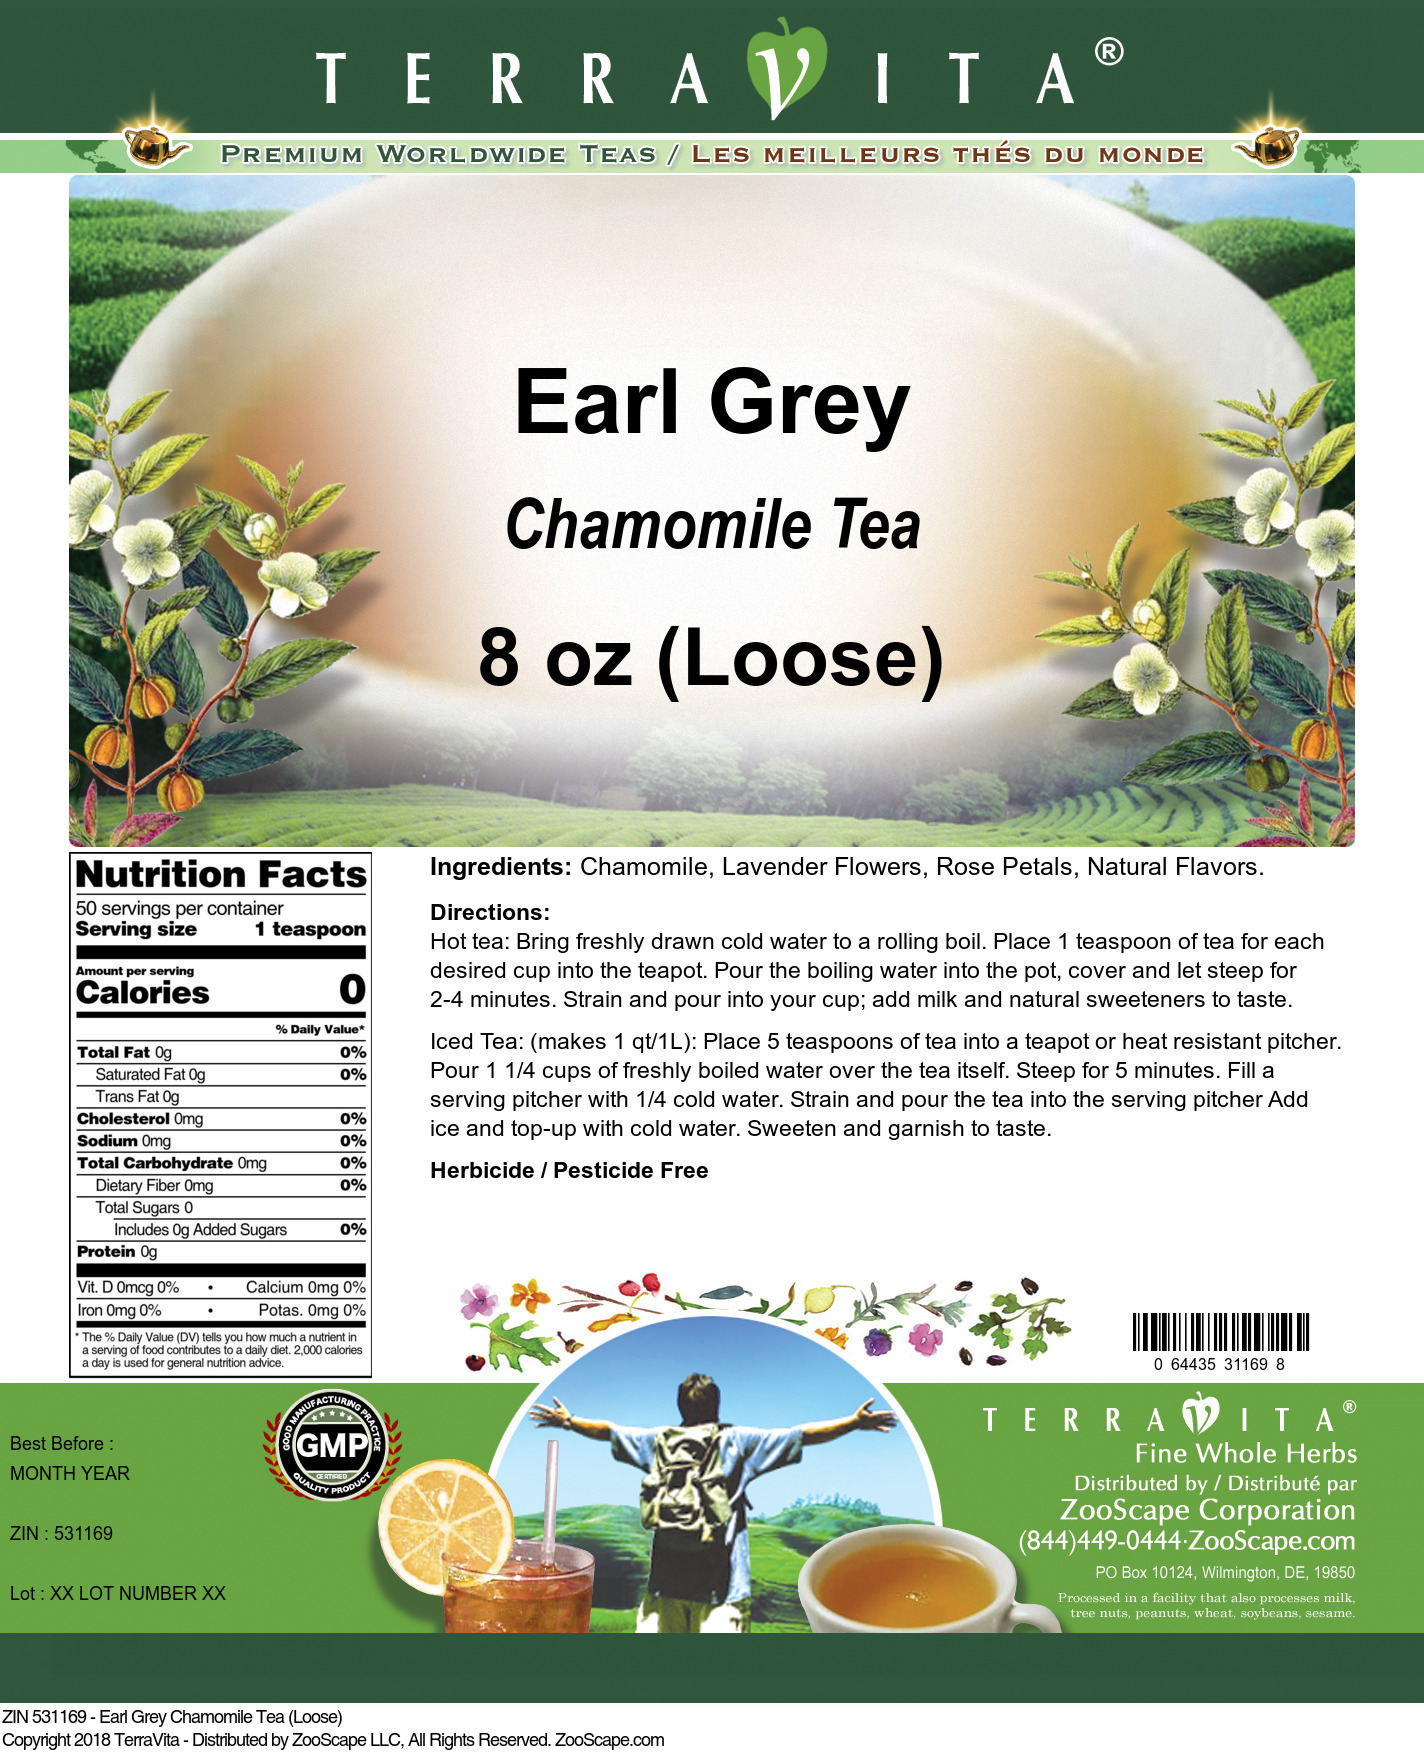 Earl Grey Chamomile Tea (Loose) - Label